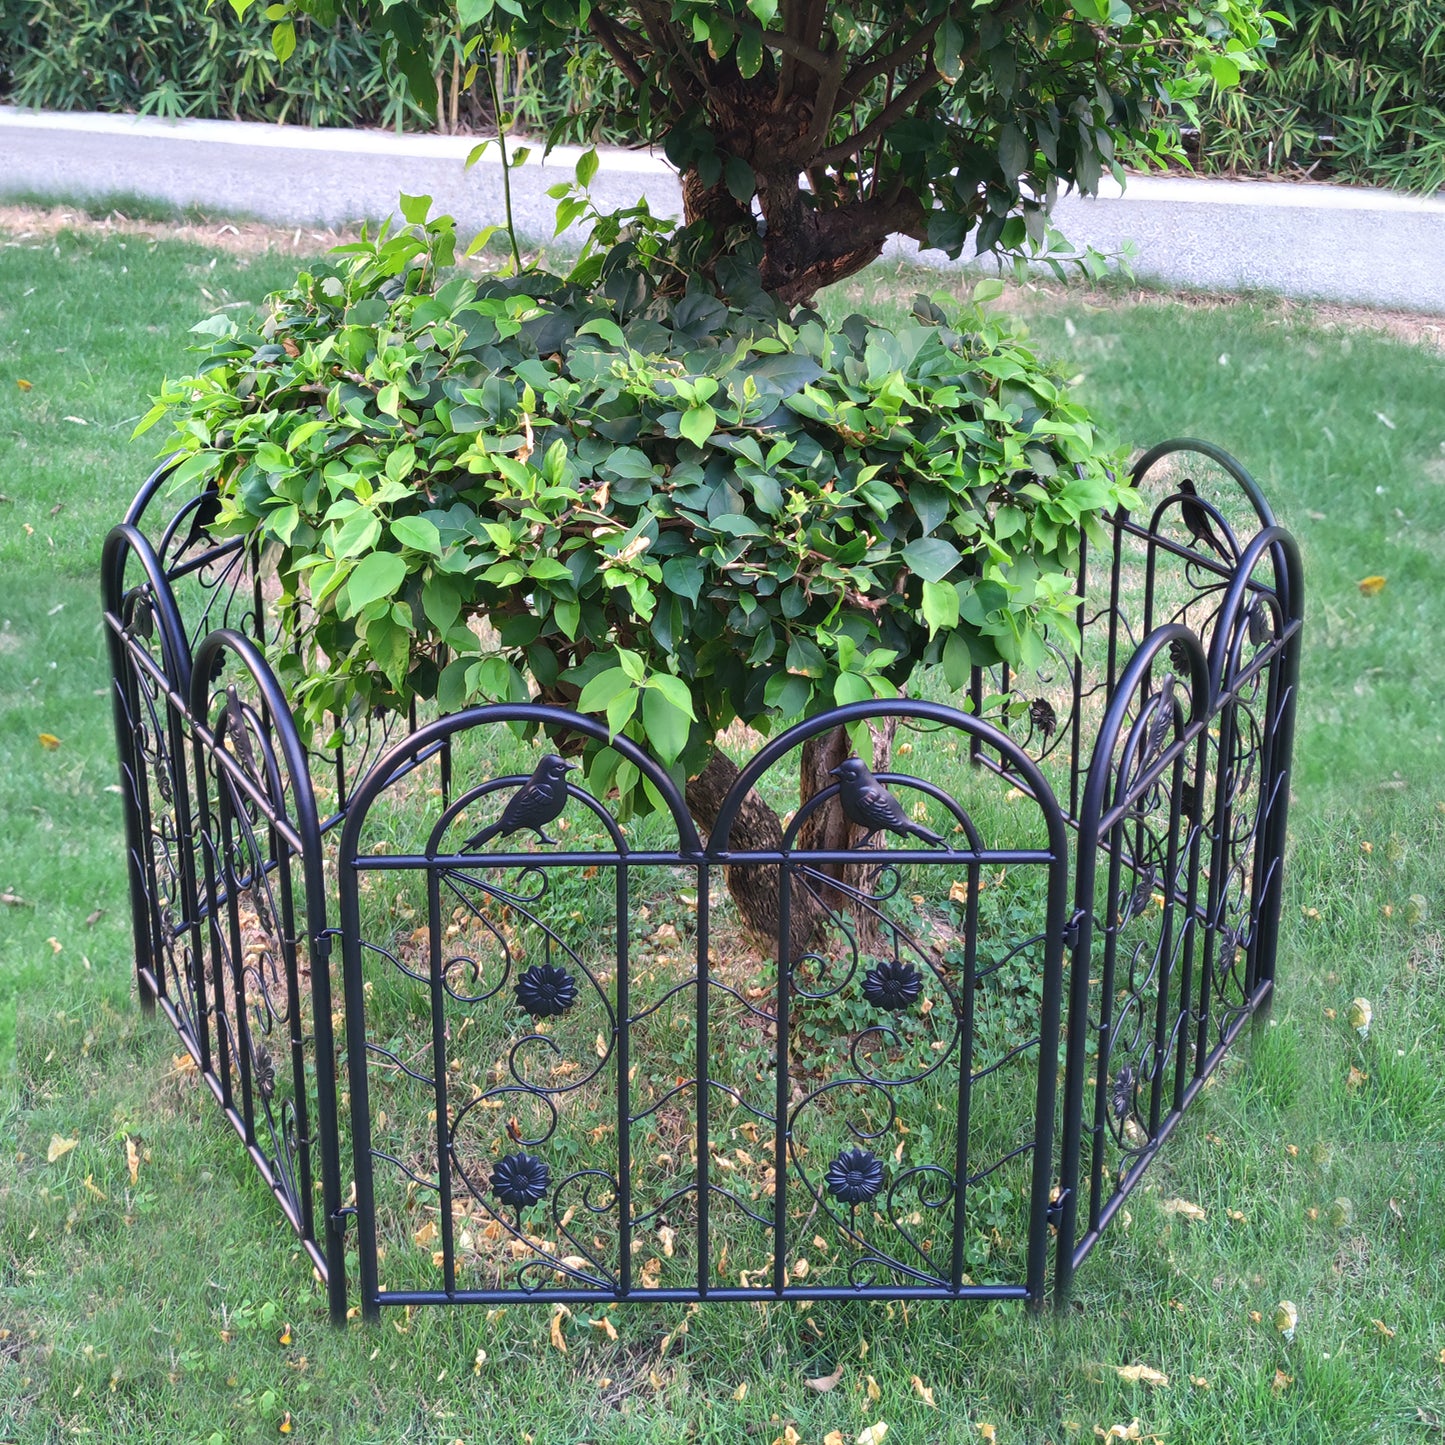 Decorative Garden Fences 5 Pack Metal Panels Edging Fences Patio Lawn Landscape Fencing Flower Bed Border for Outdoor Yards